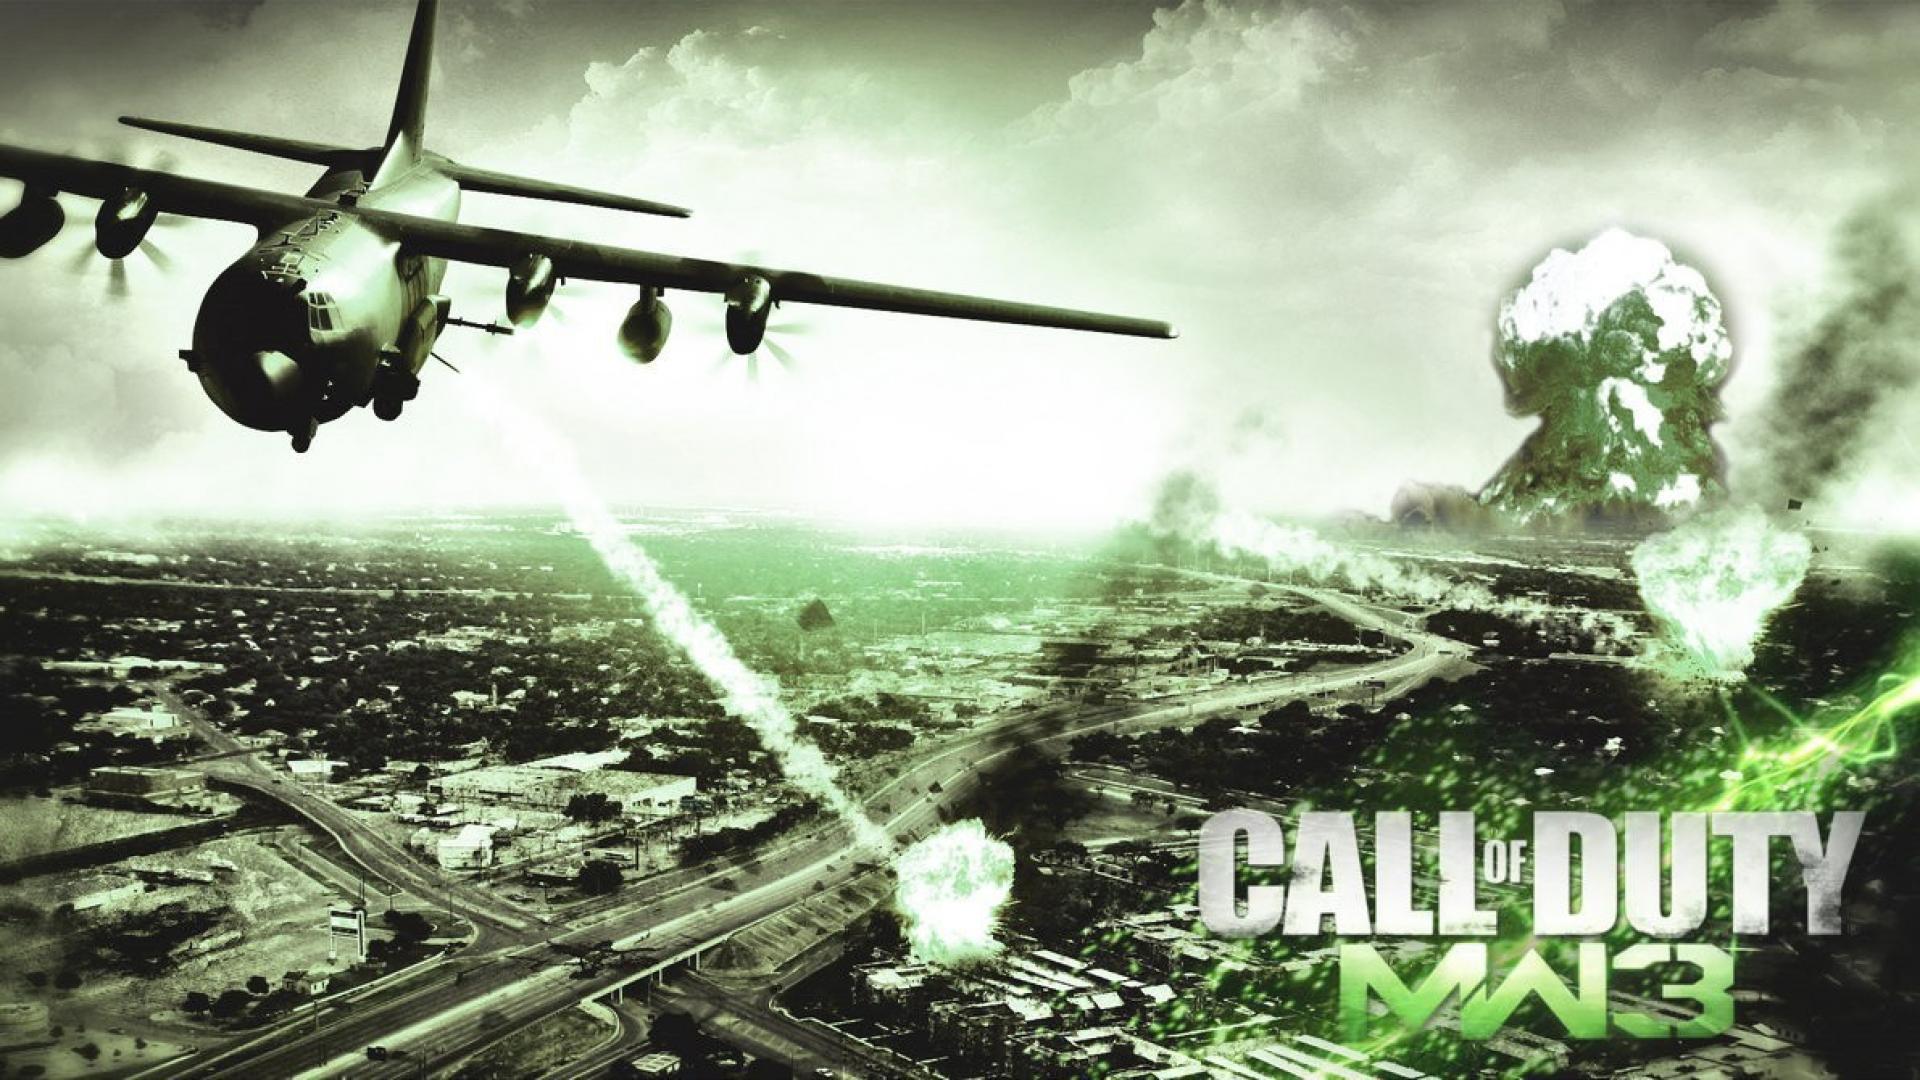 Call of Duty Modern Warfare 3 Wallpaper Free Call of Duty Modern Warfare 3 Background